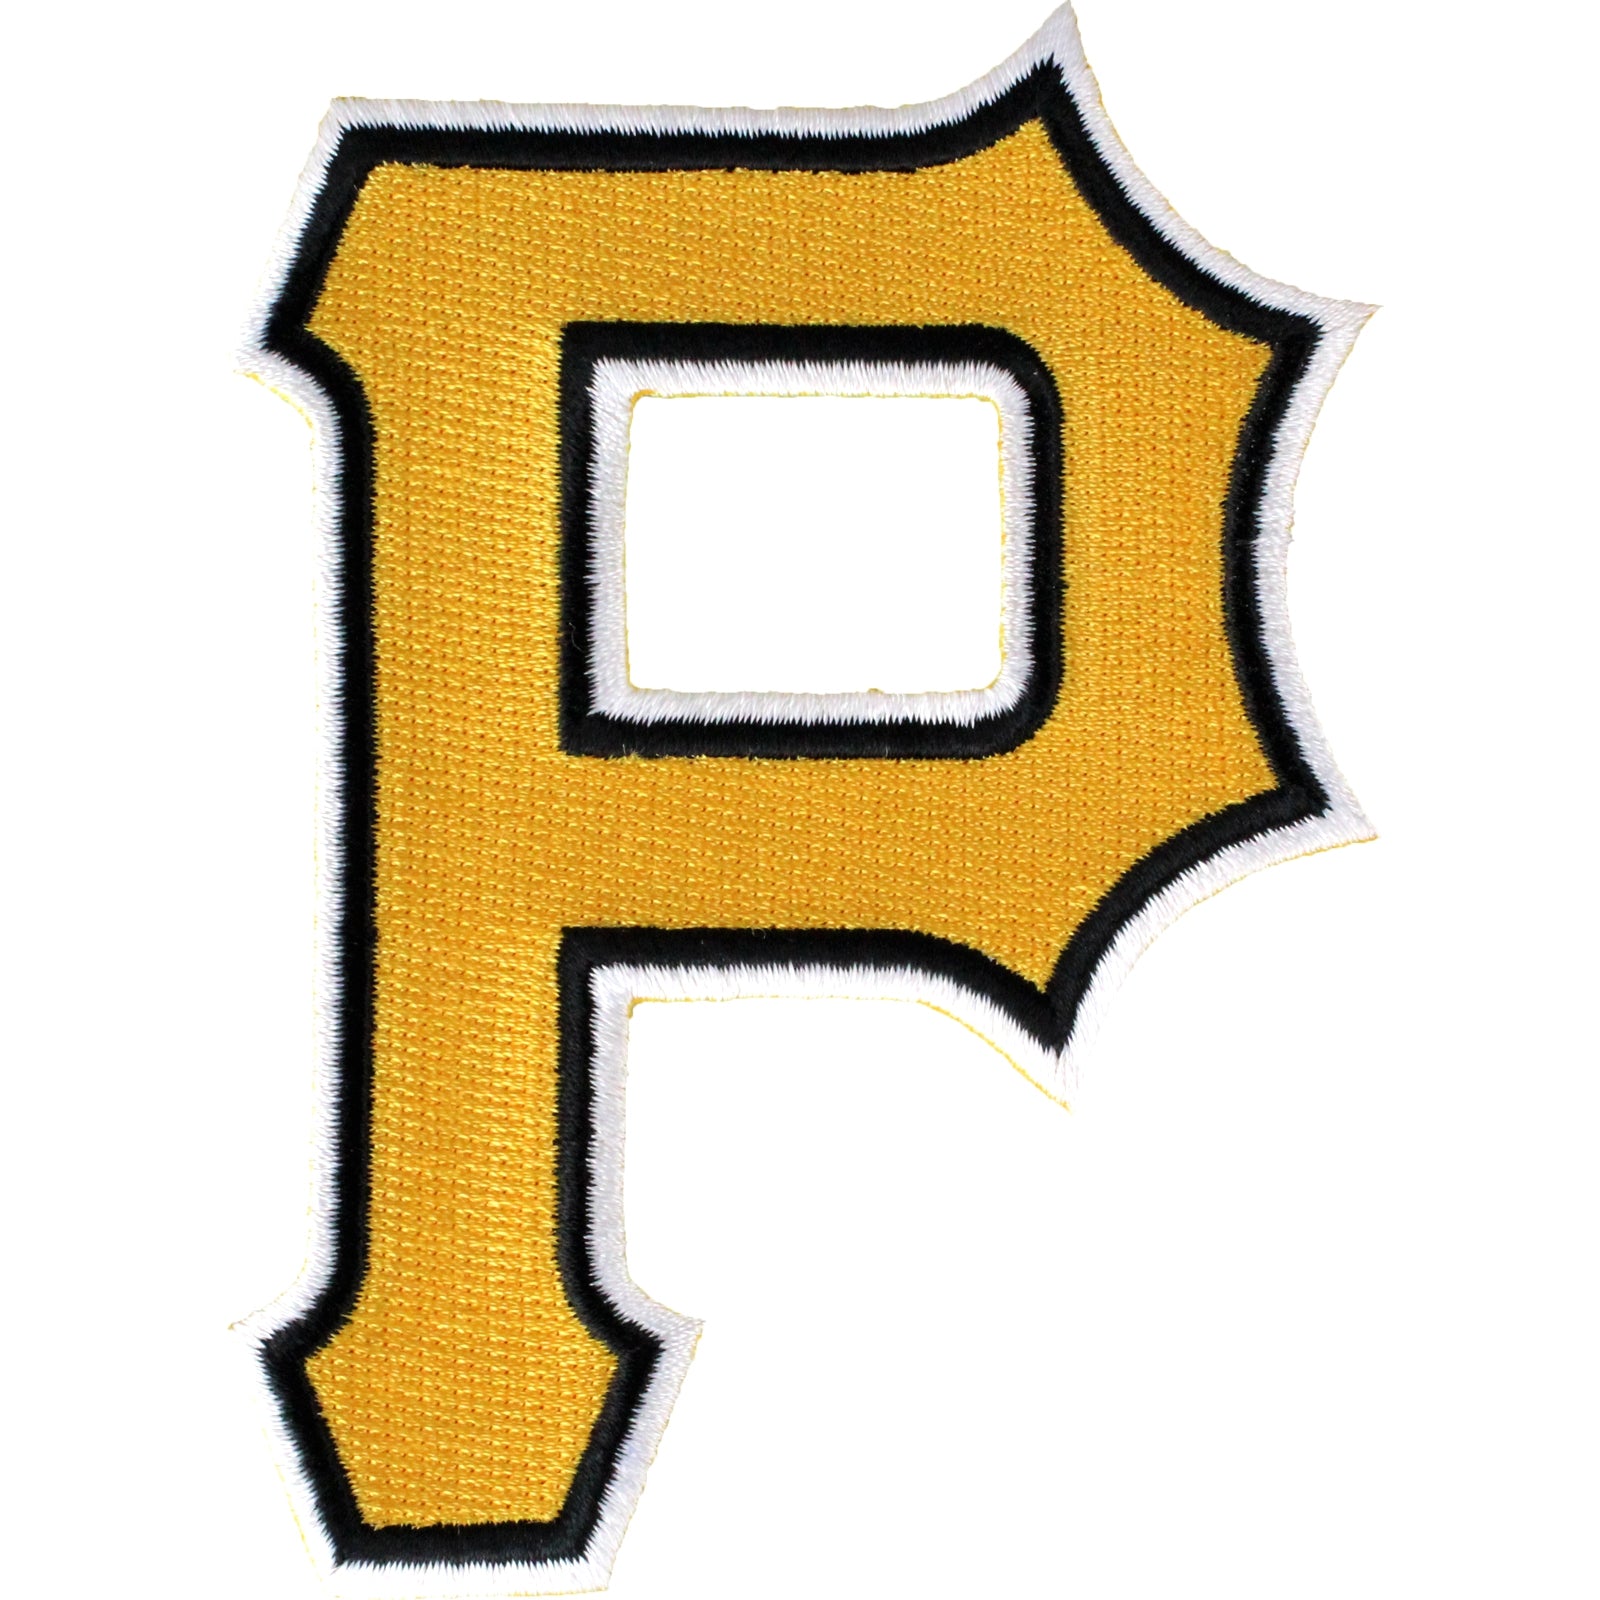 Pittsburgh Pirates Misc Logo History